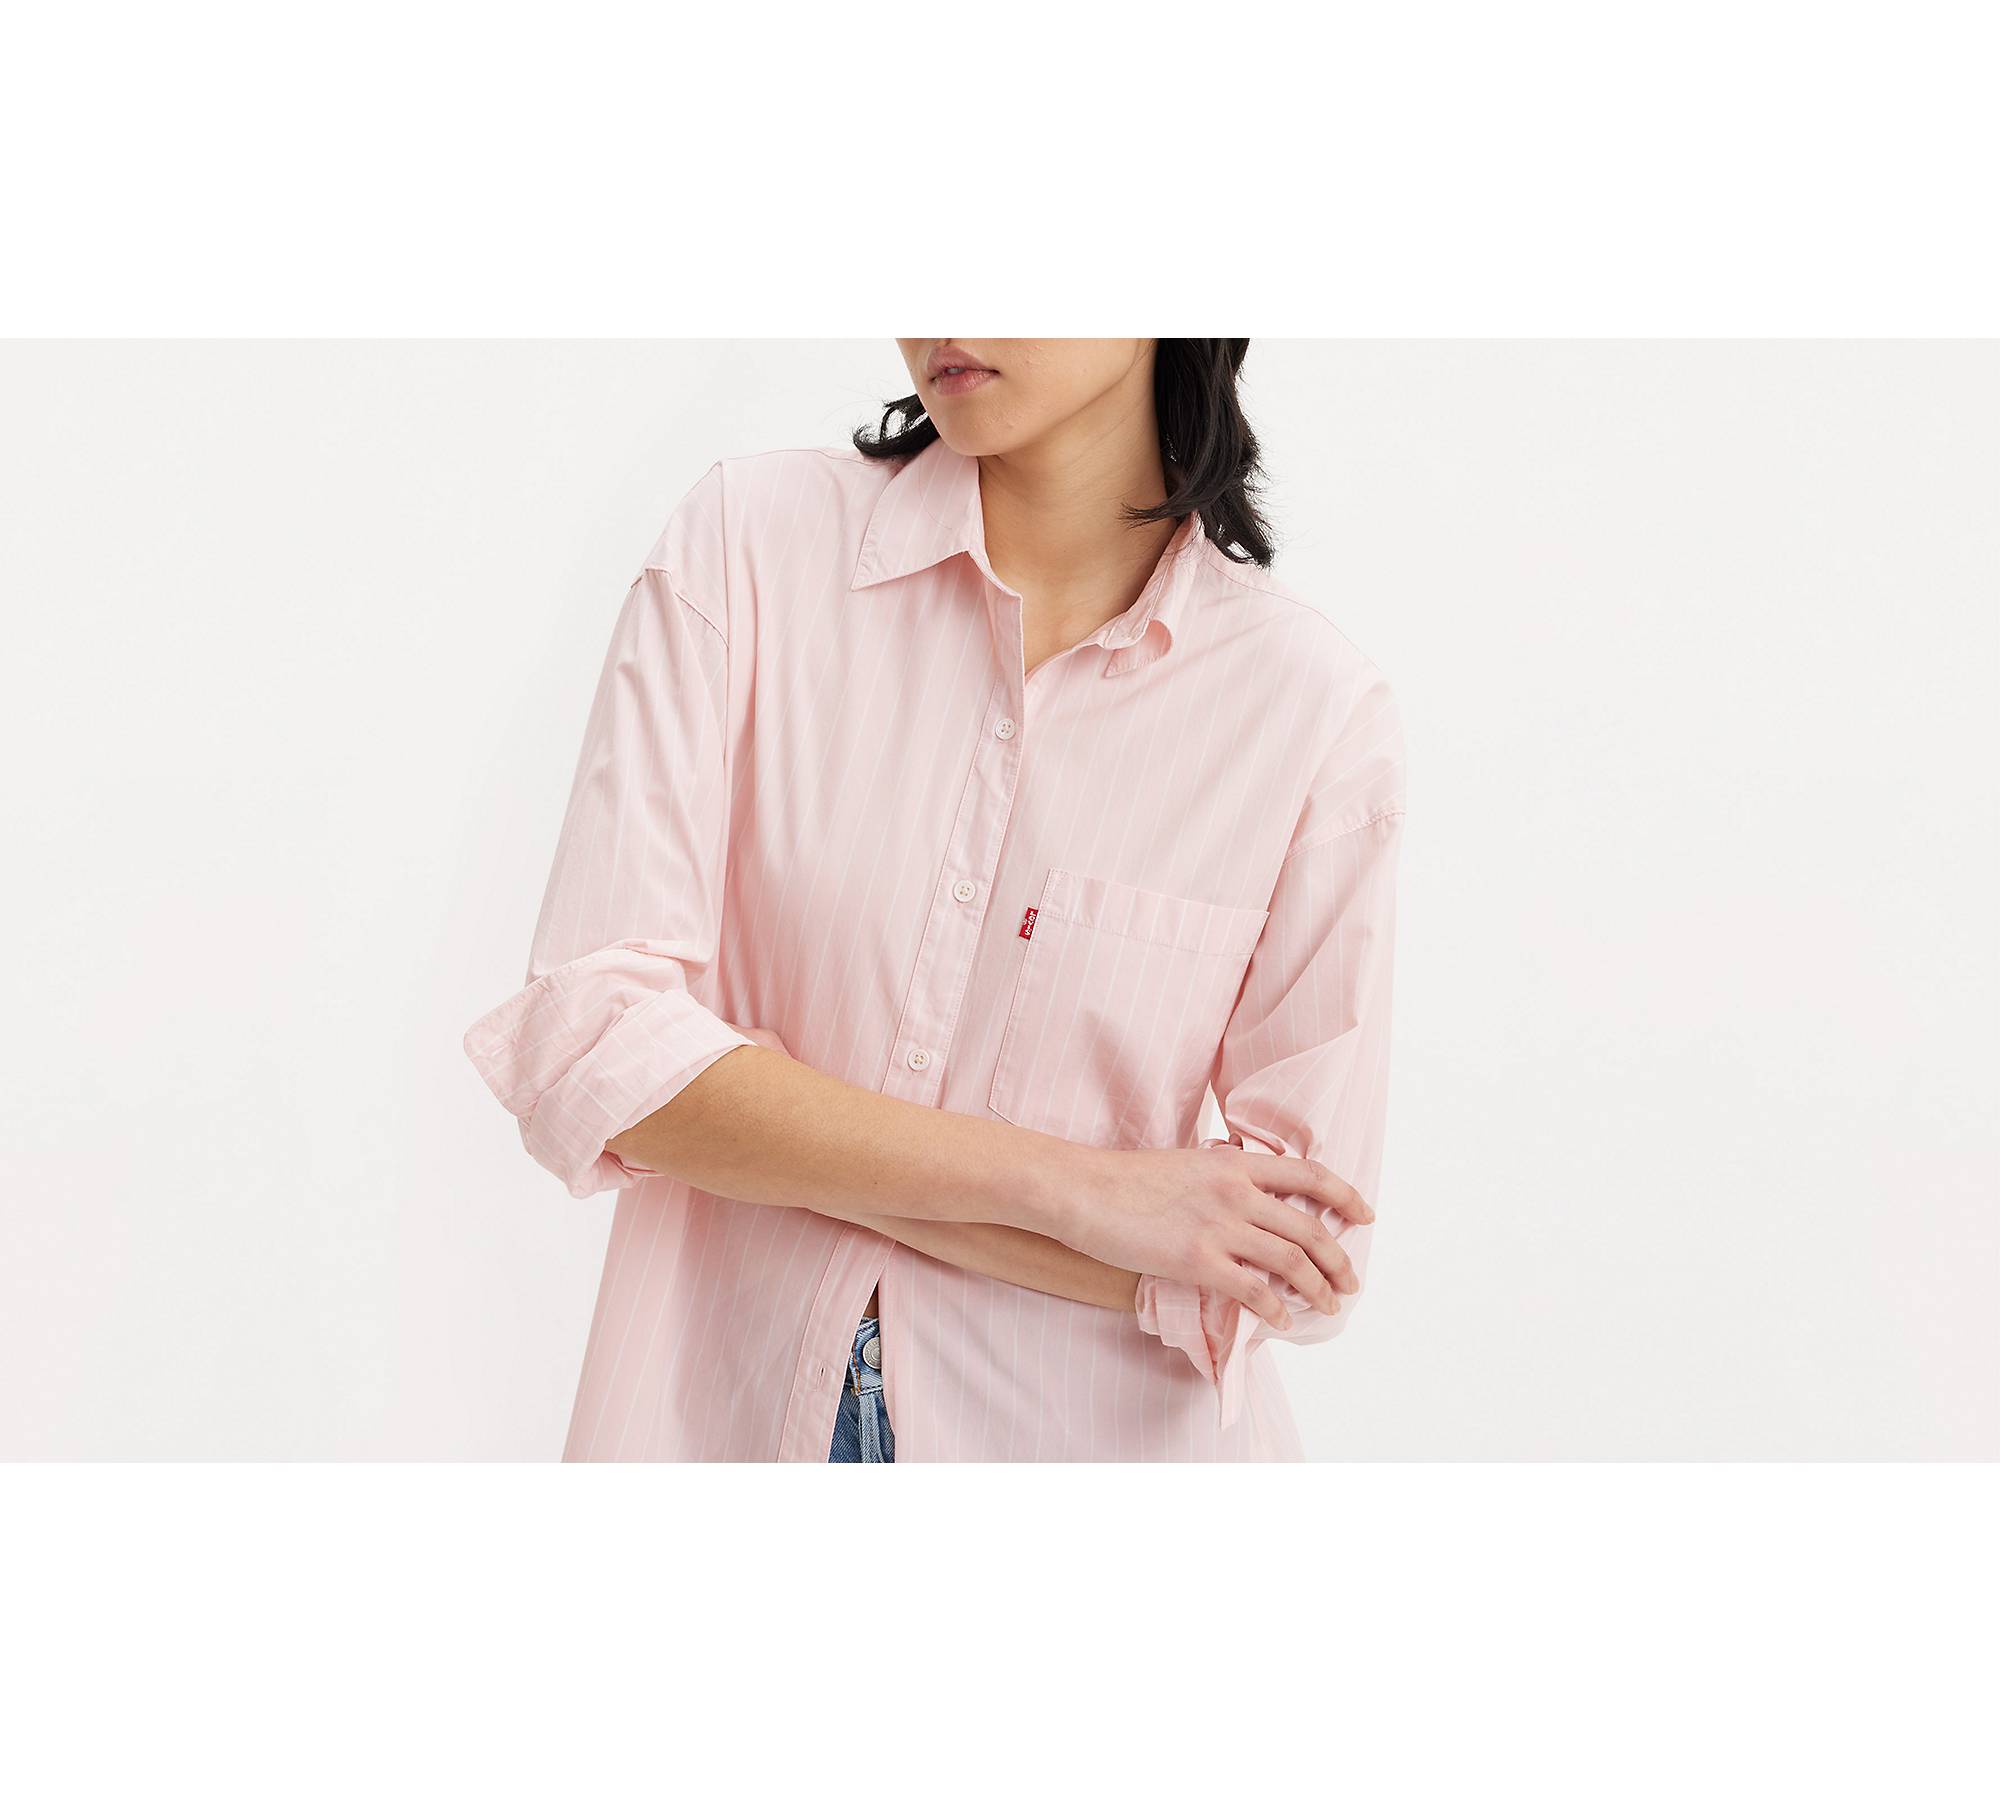 Ladies shirt- LS914  Mbrella - A Lifestyle Clothing Brand